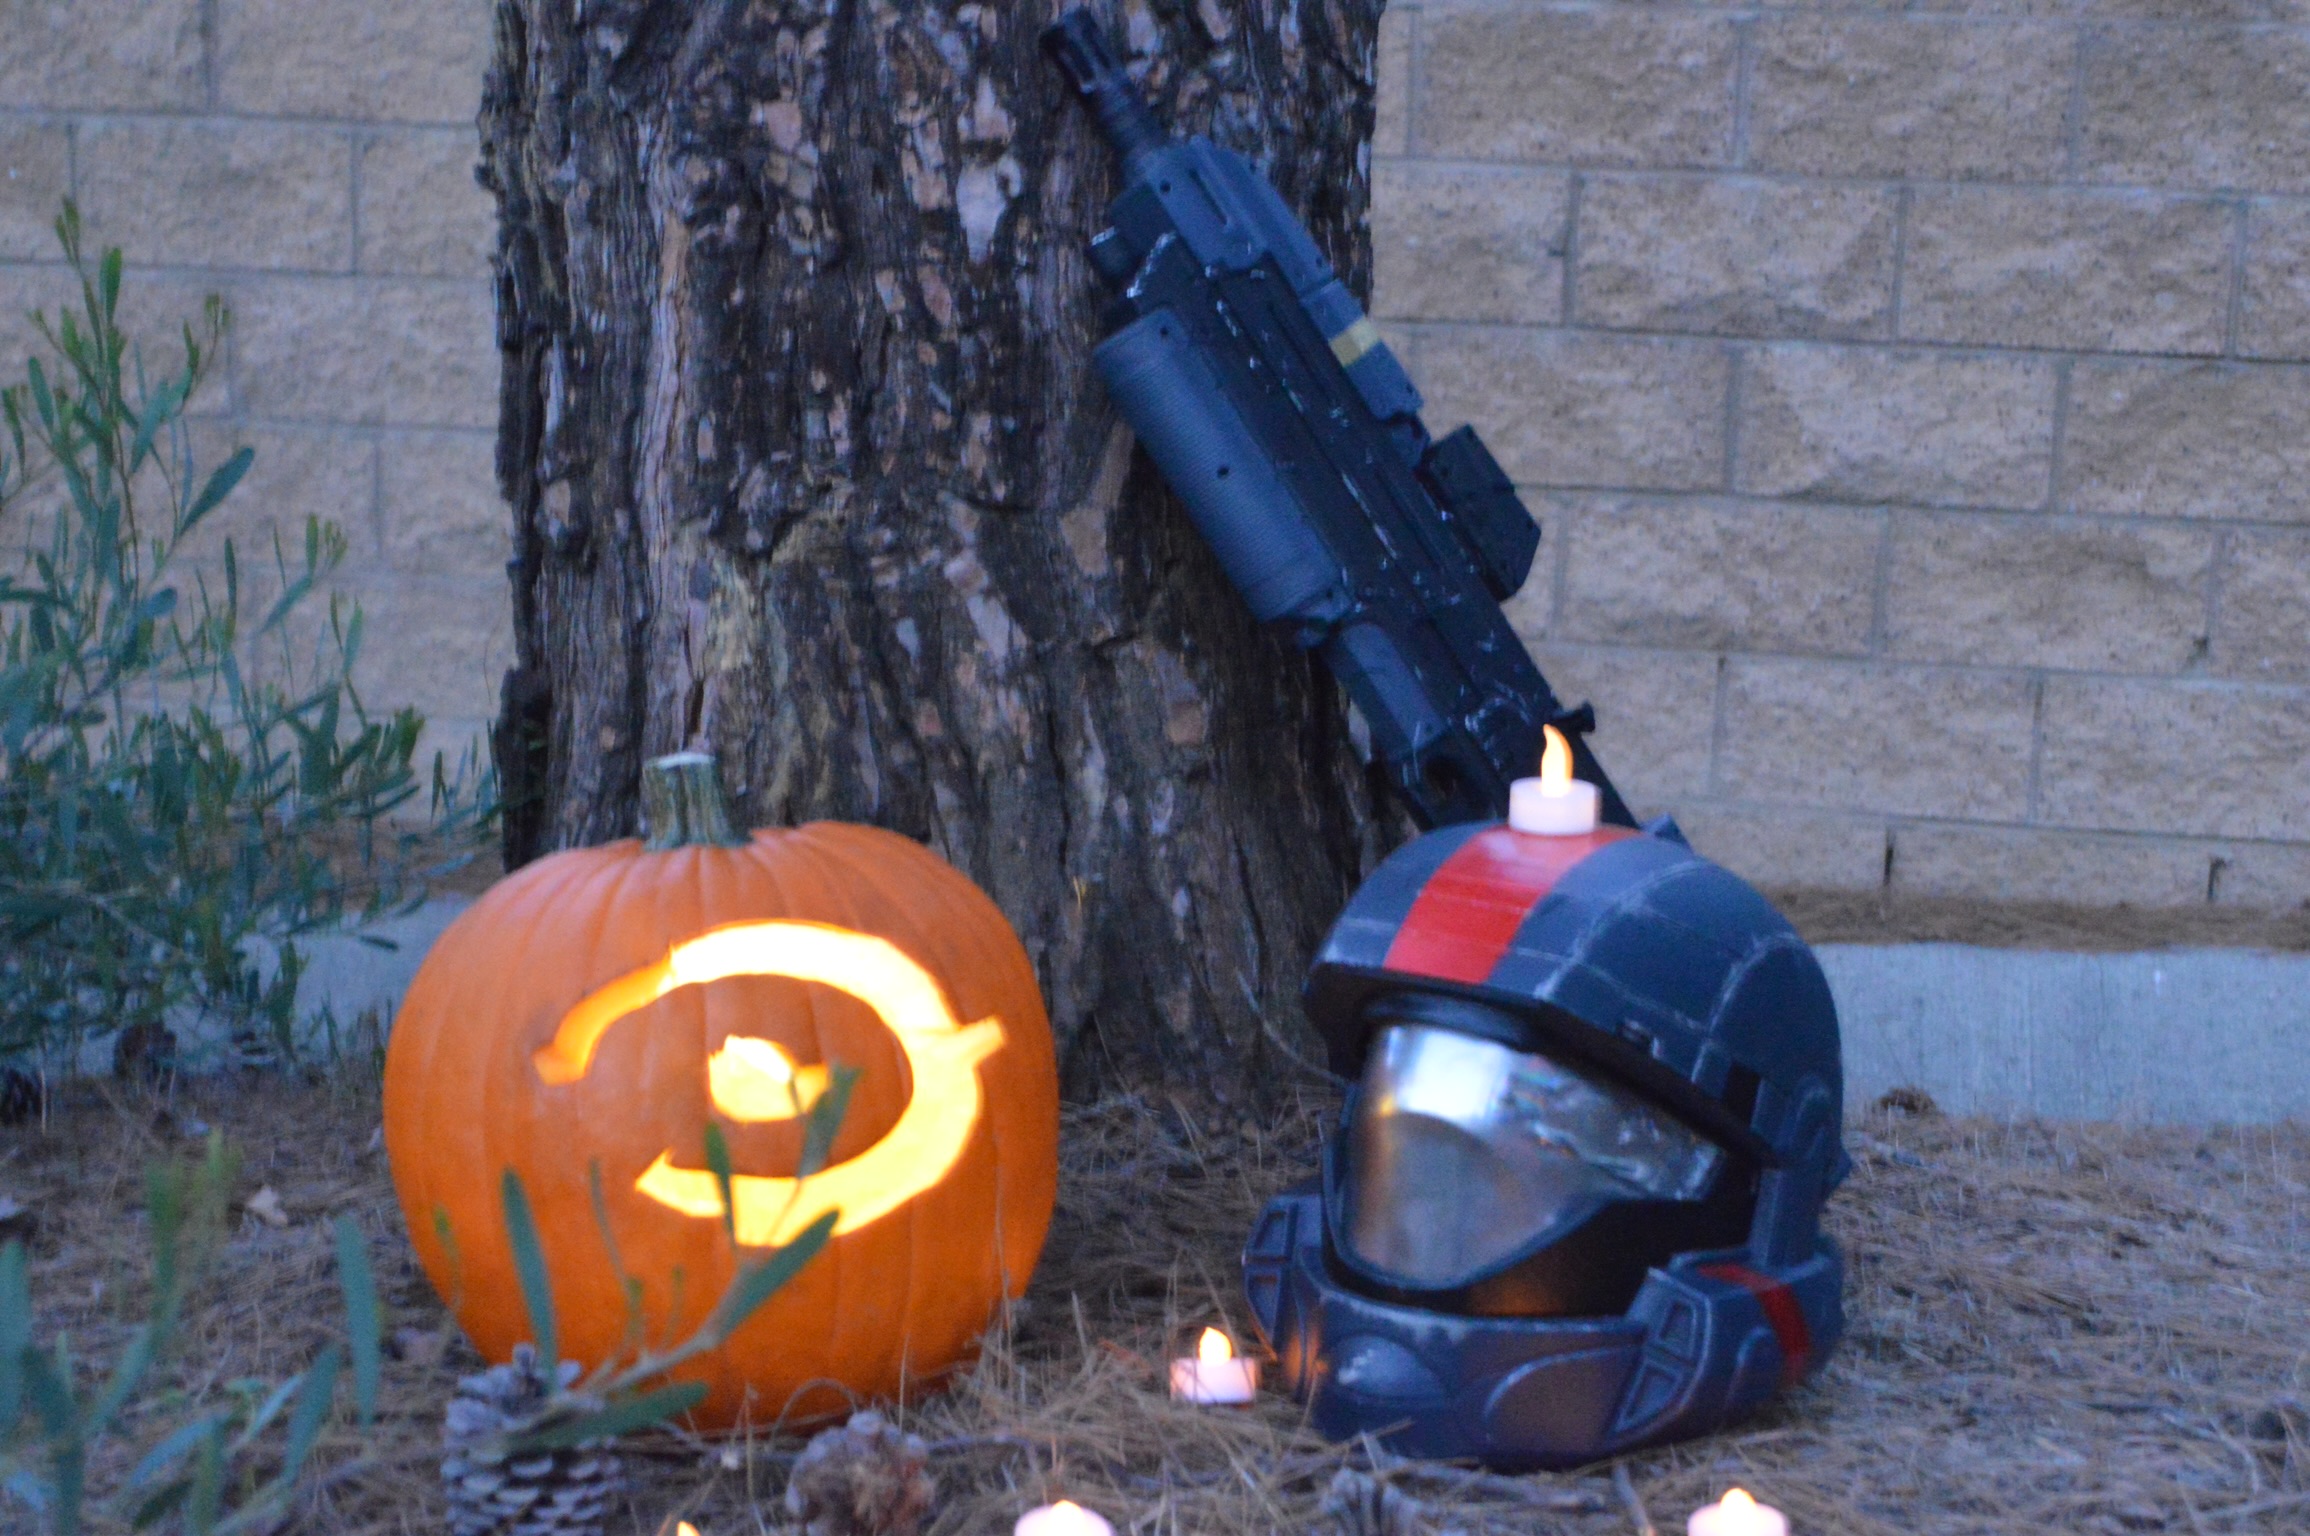 Nice little photo of my helmet with pumpkins